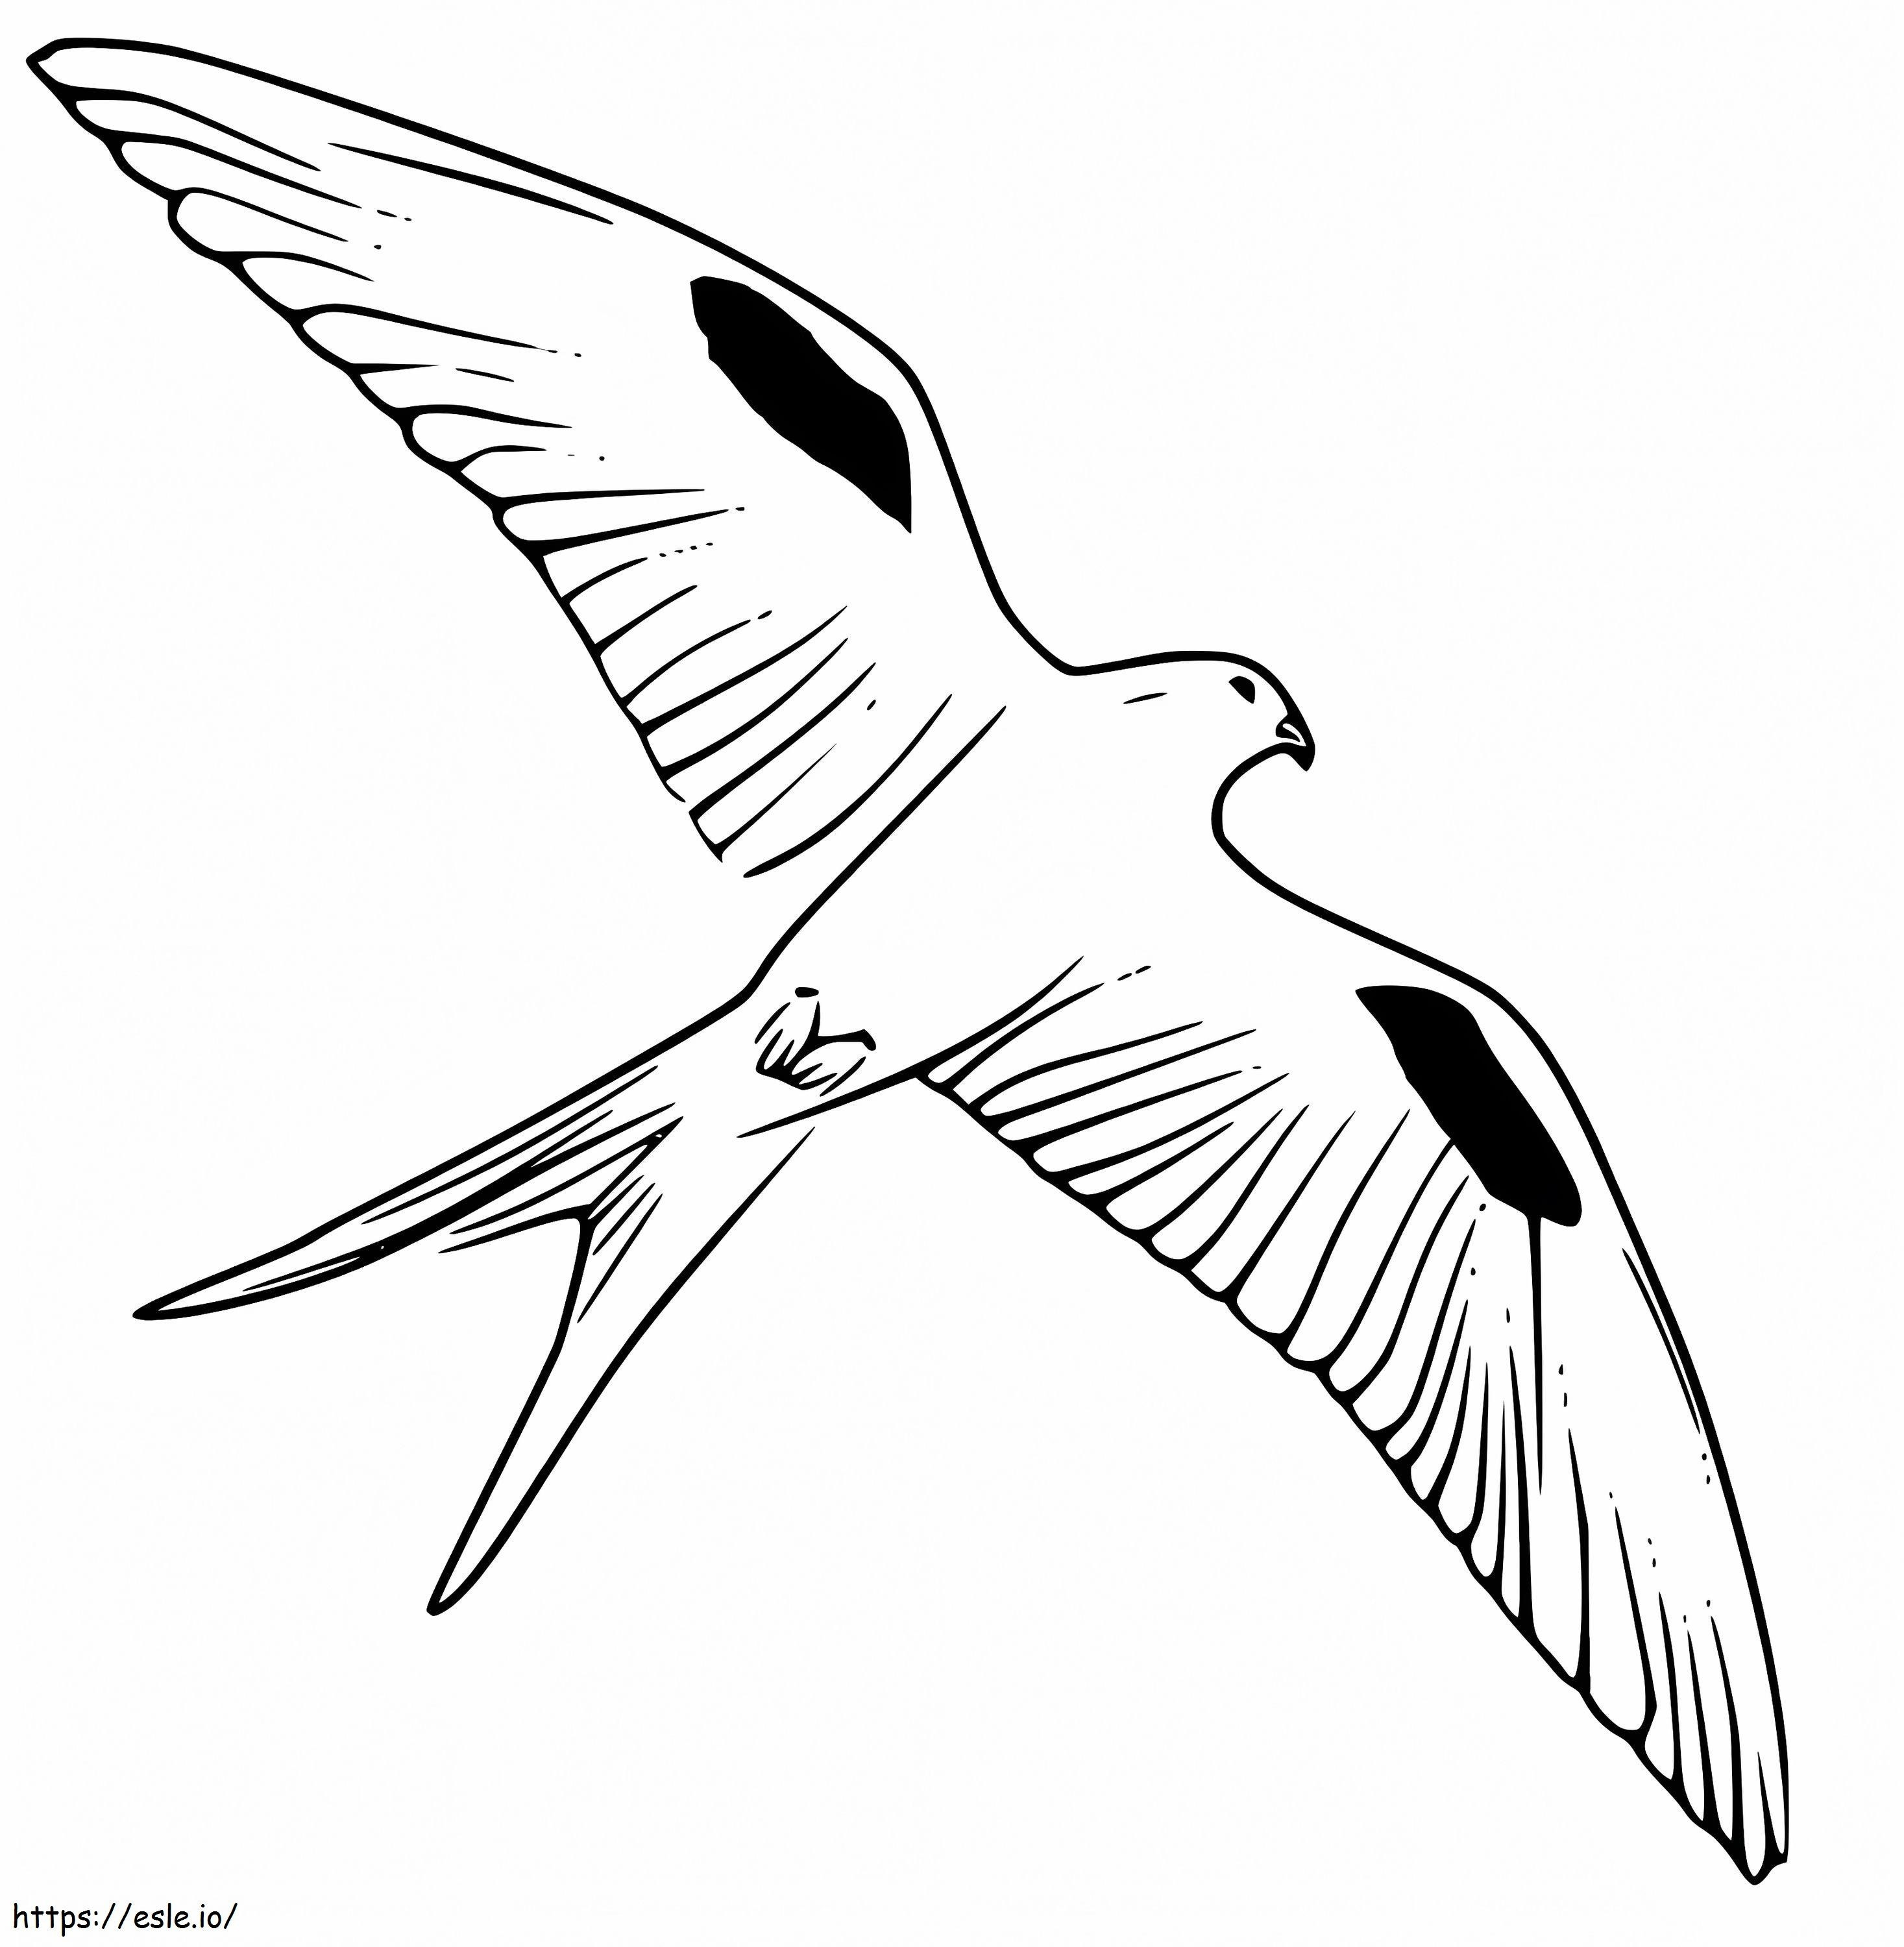 Kite Bird Fying coloring page